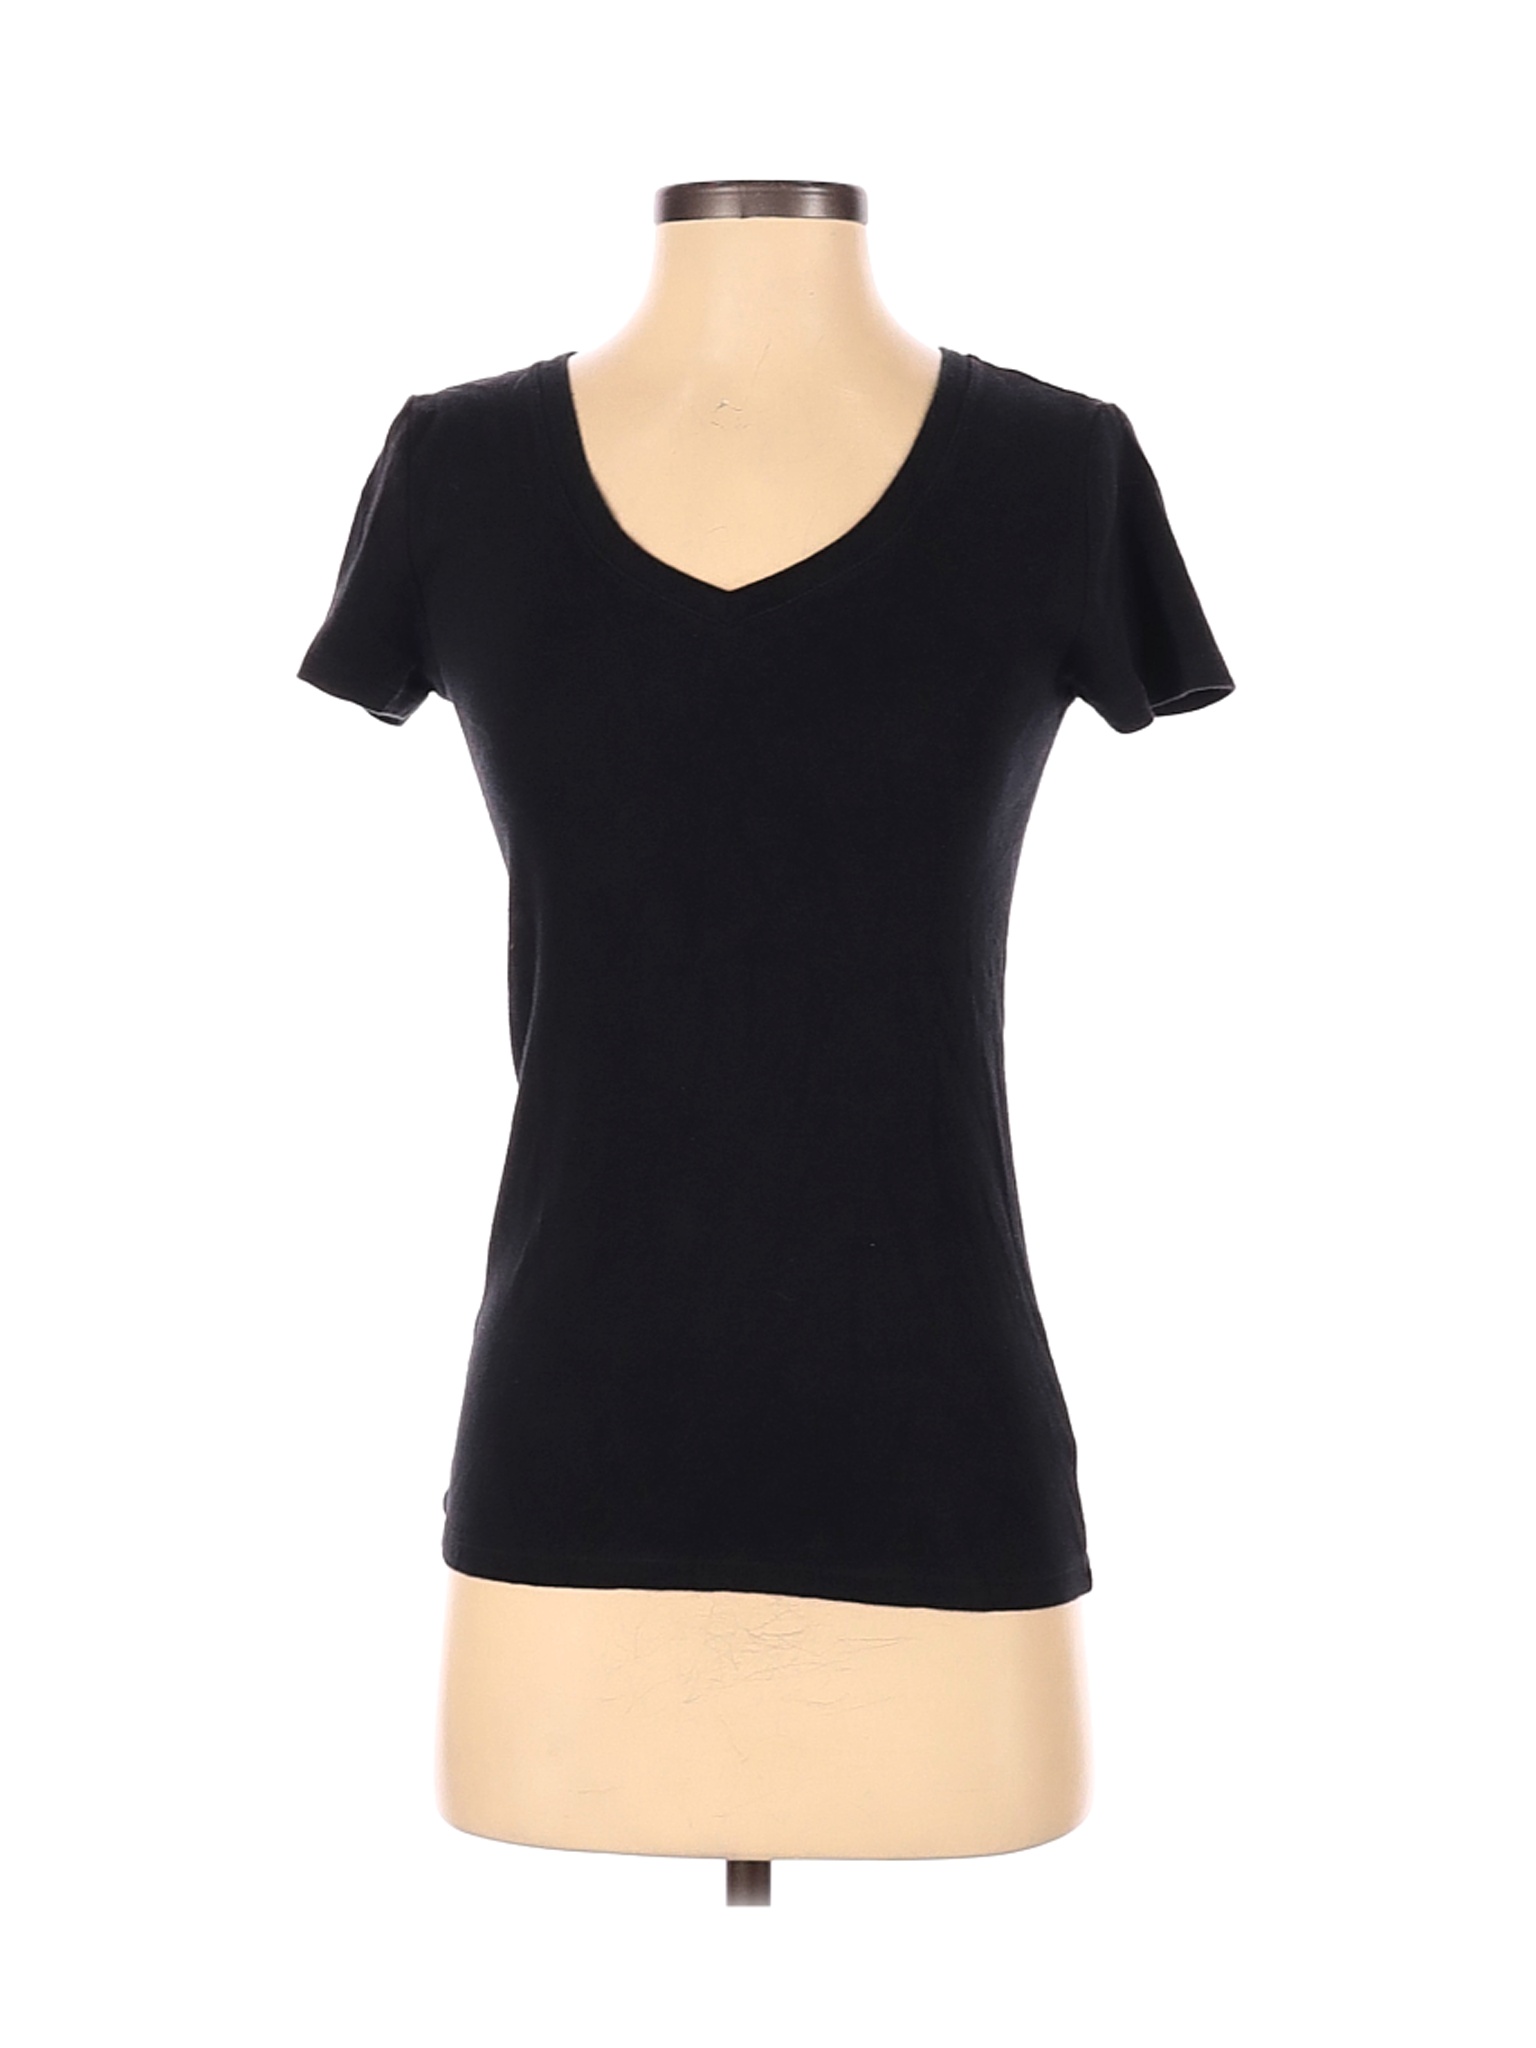 Gap Women Black Short Sleeve T-Shirt S | eBay